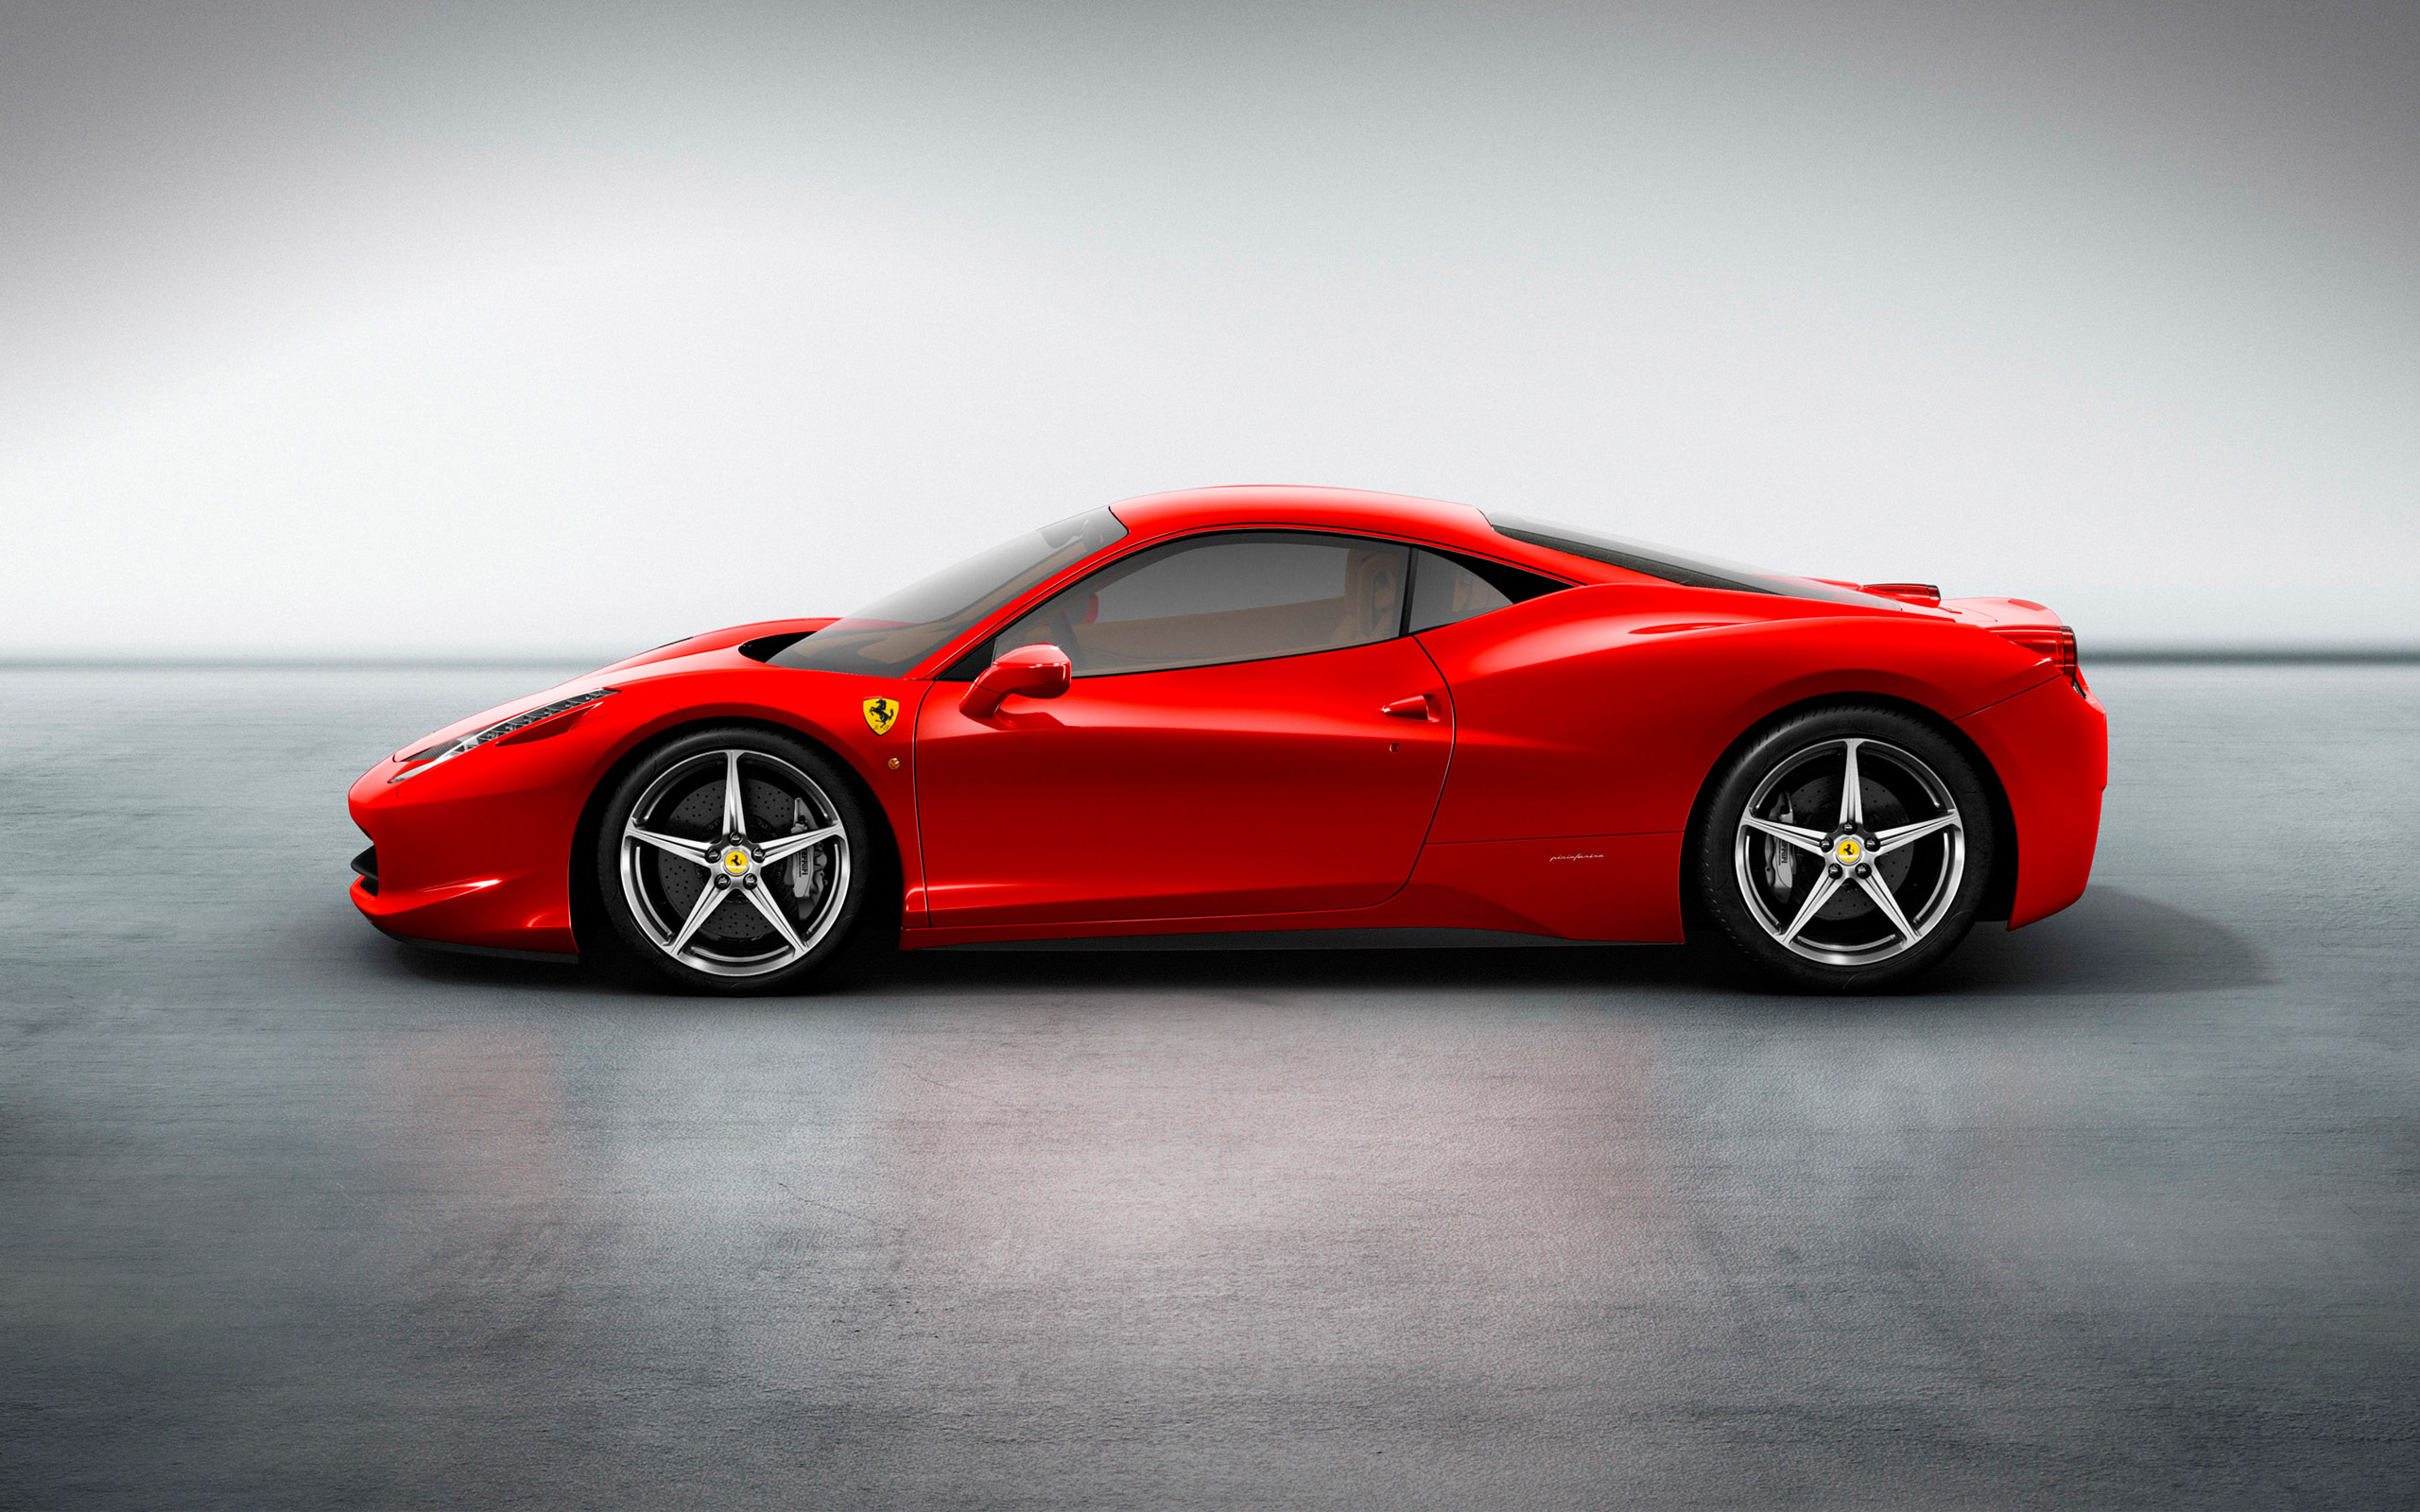 Красный ferrari. Ferrari f458. Феррари 458 Italia. Автомобиль Ferrari 458 Italia. Ferrari 458 Italia красная.